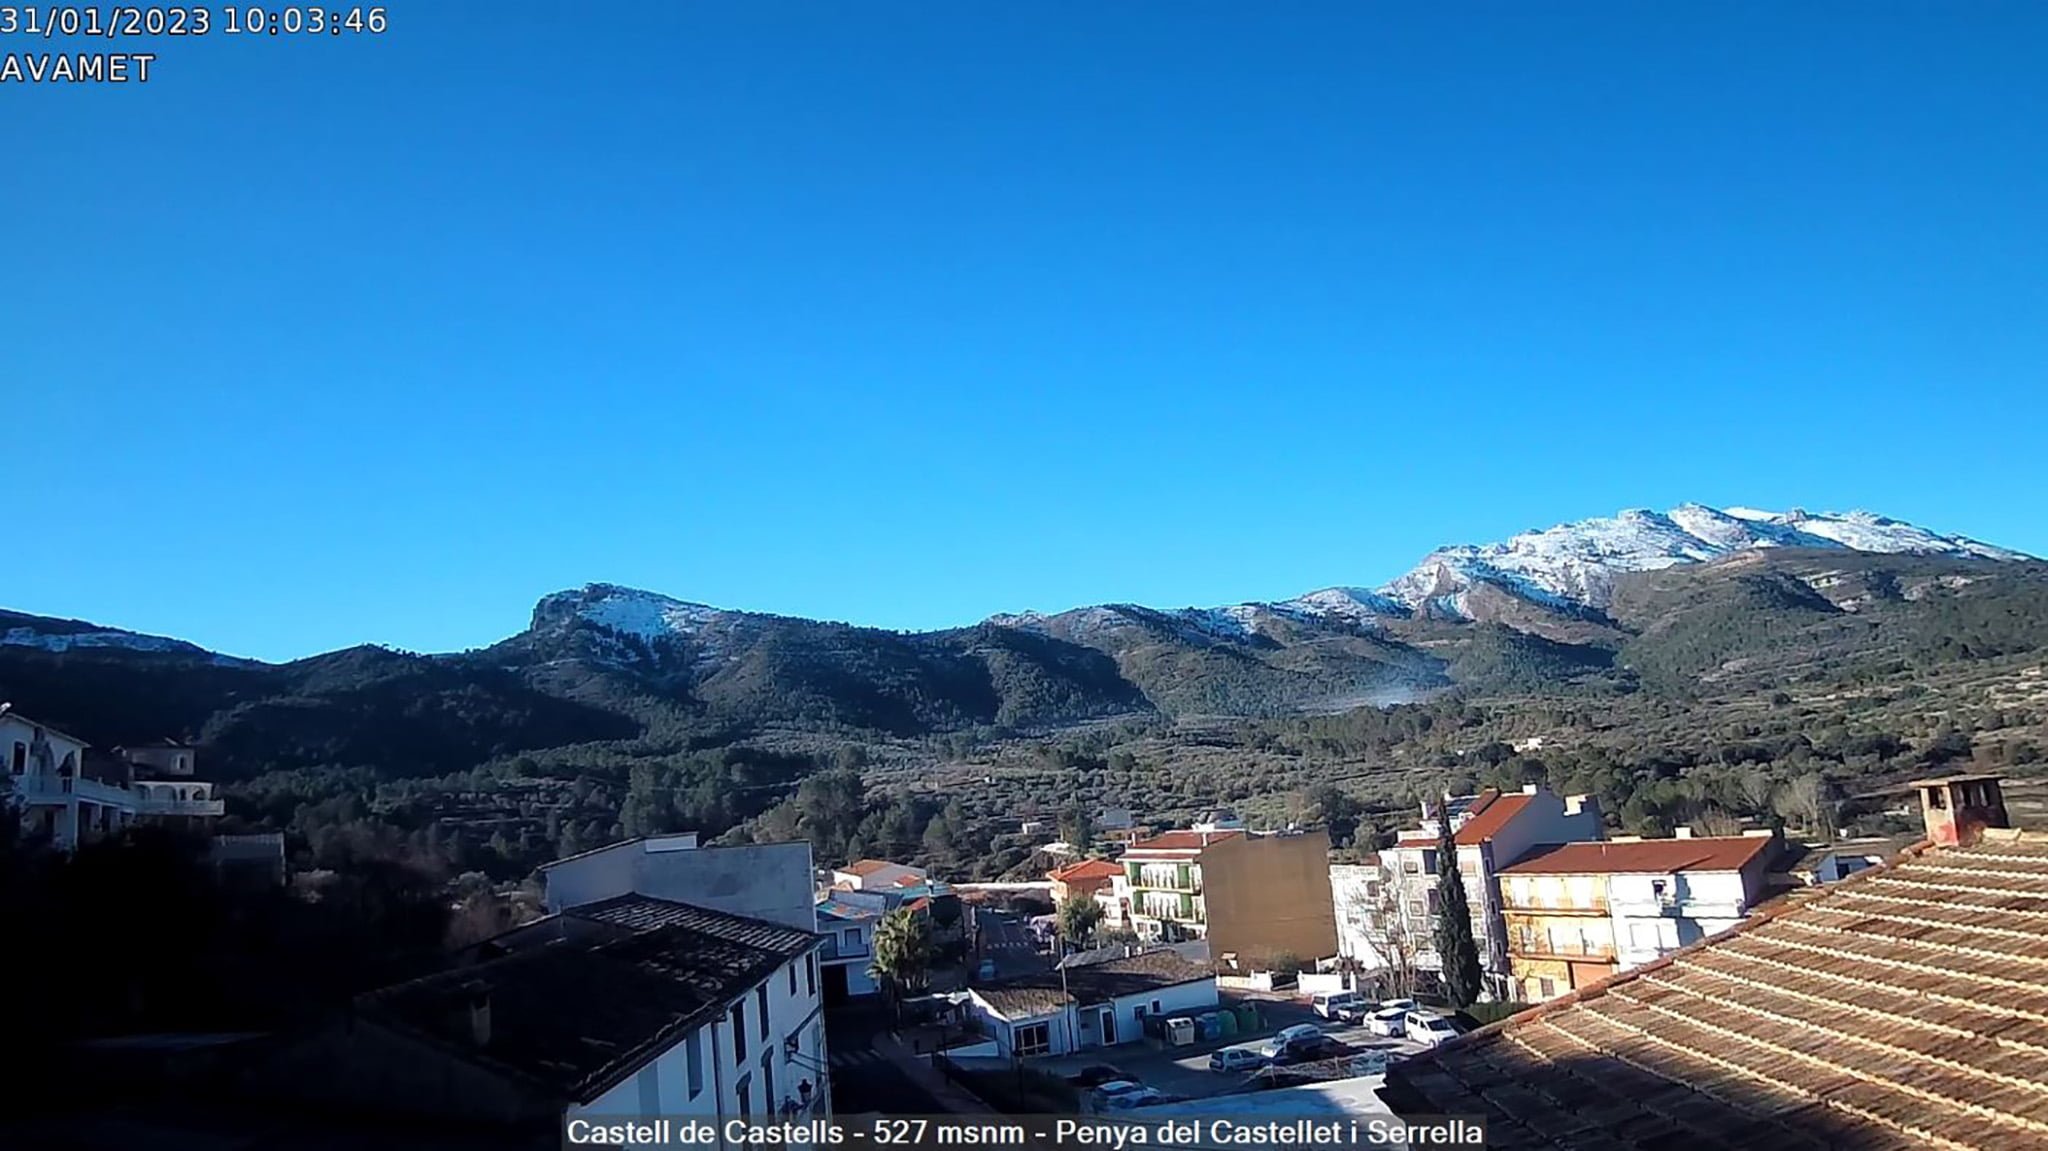 Webcam de AVAMET en Castell de Castells martes 31 de enero 2023